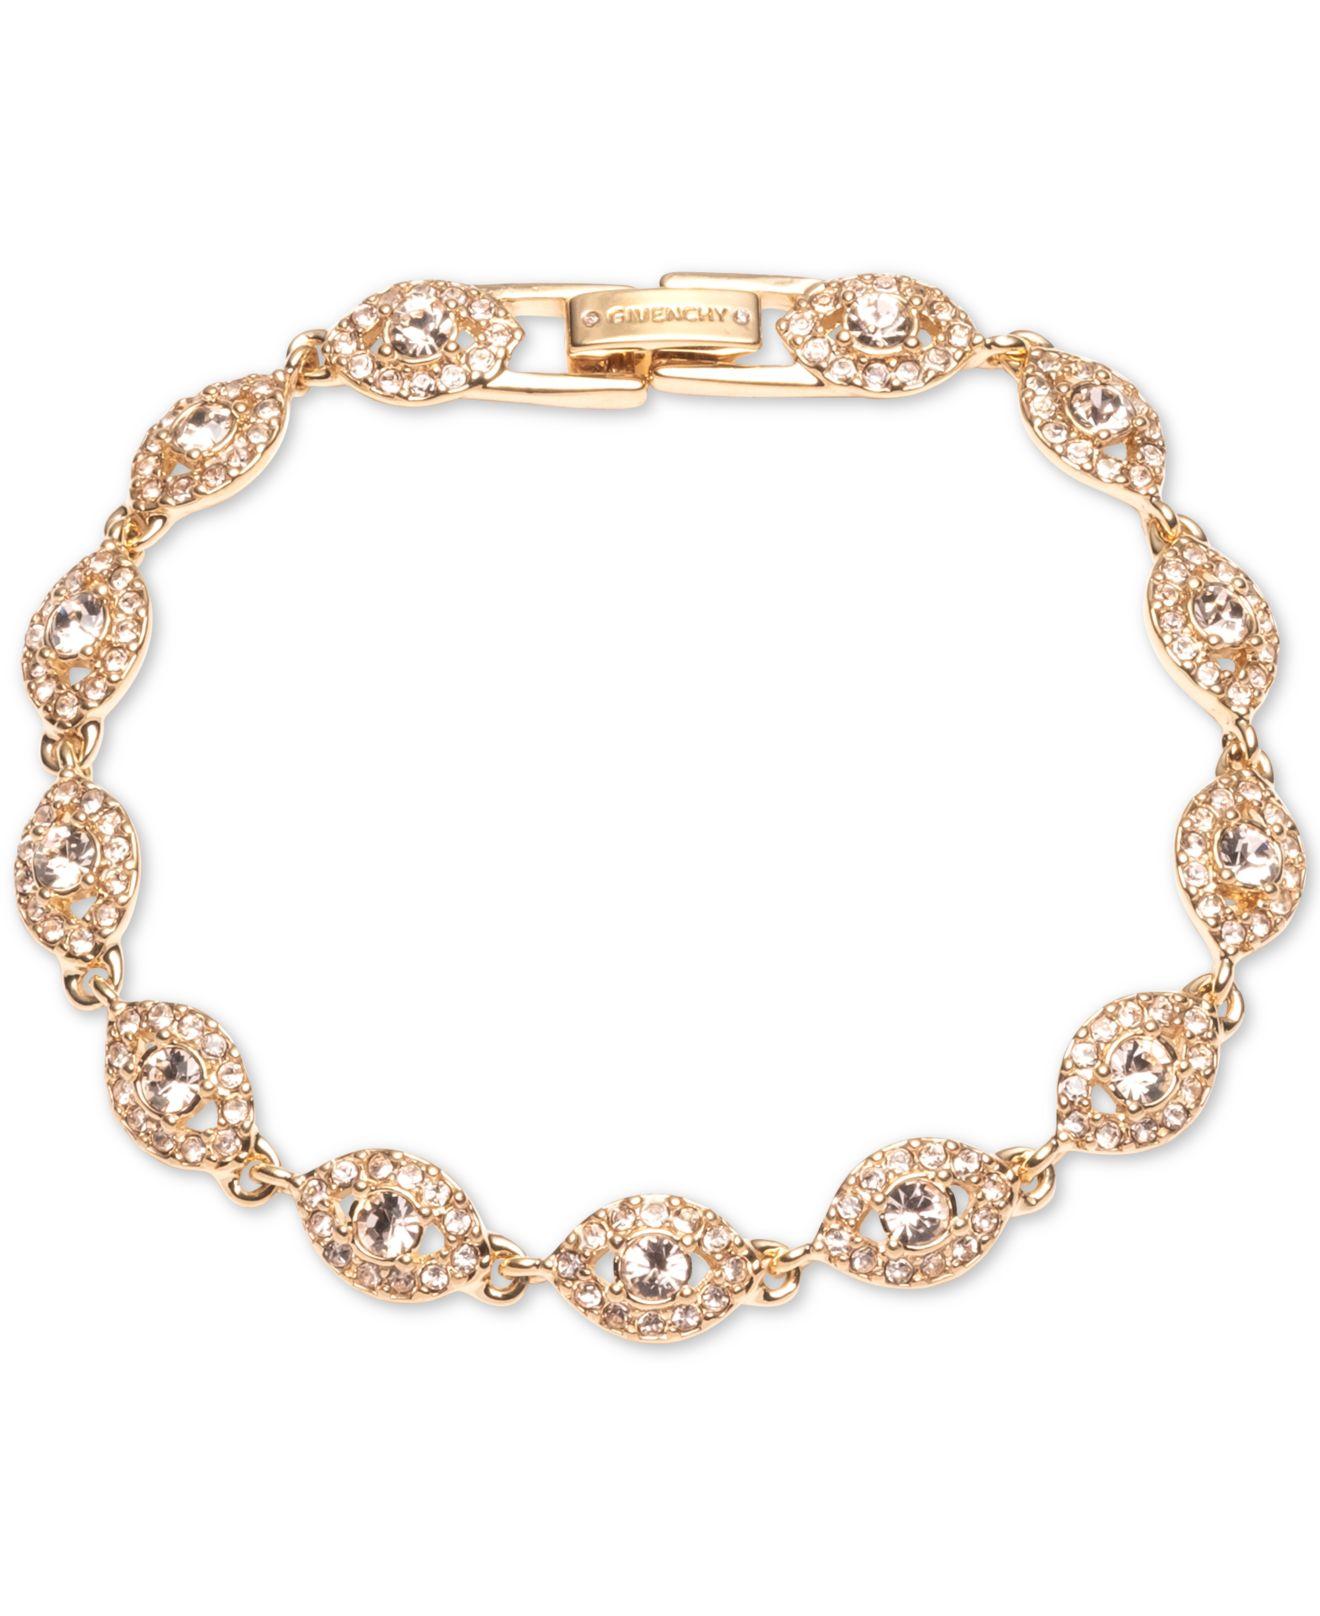 Lyst - Givenchy Crystal Flex Bracelet in Metallic